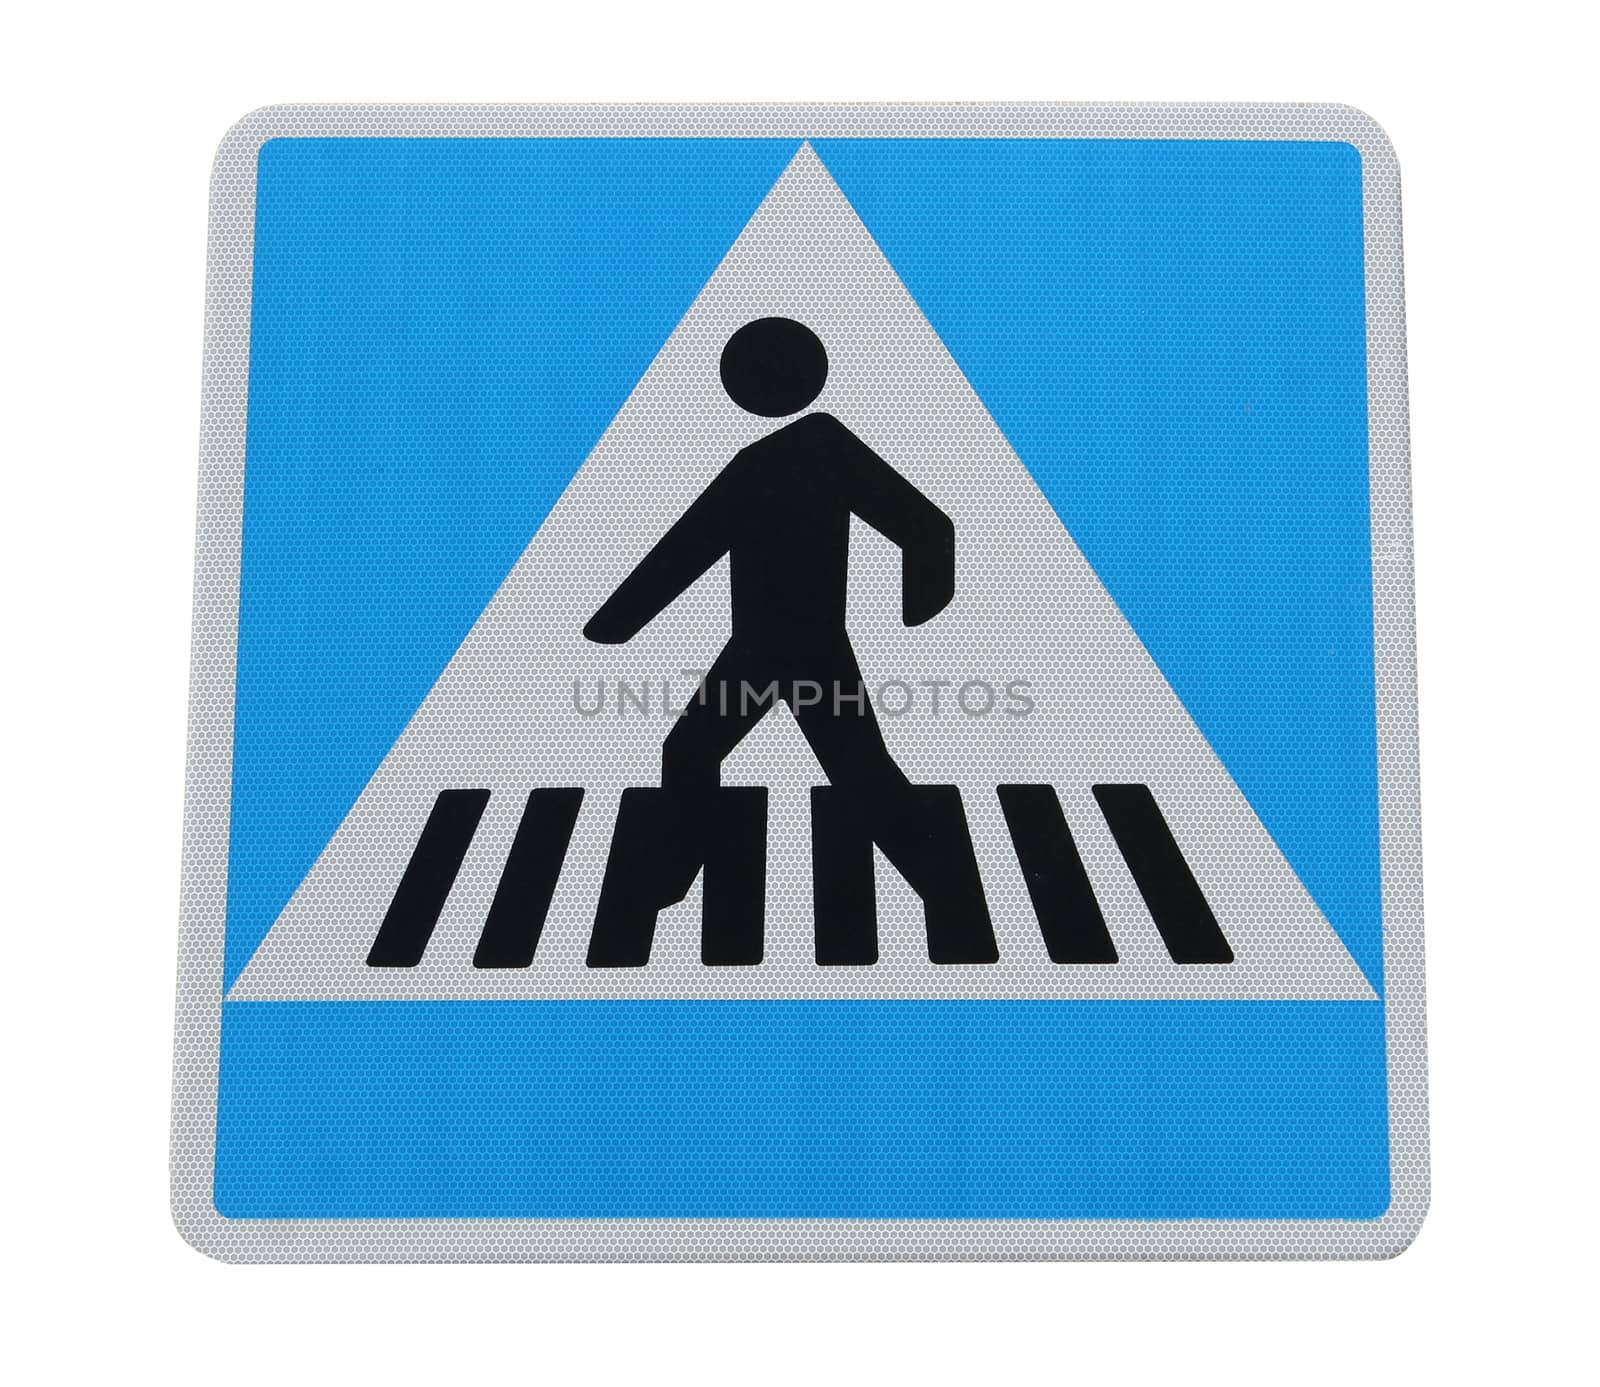 Pedestrian crossing sign by speedfighter